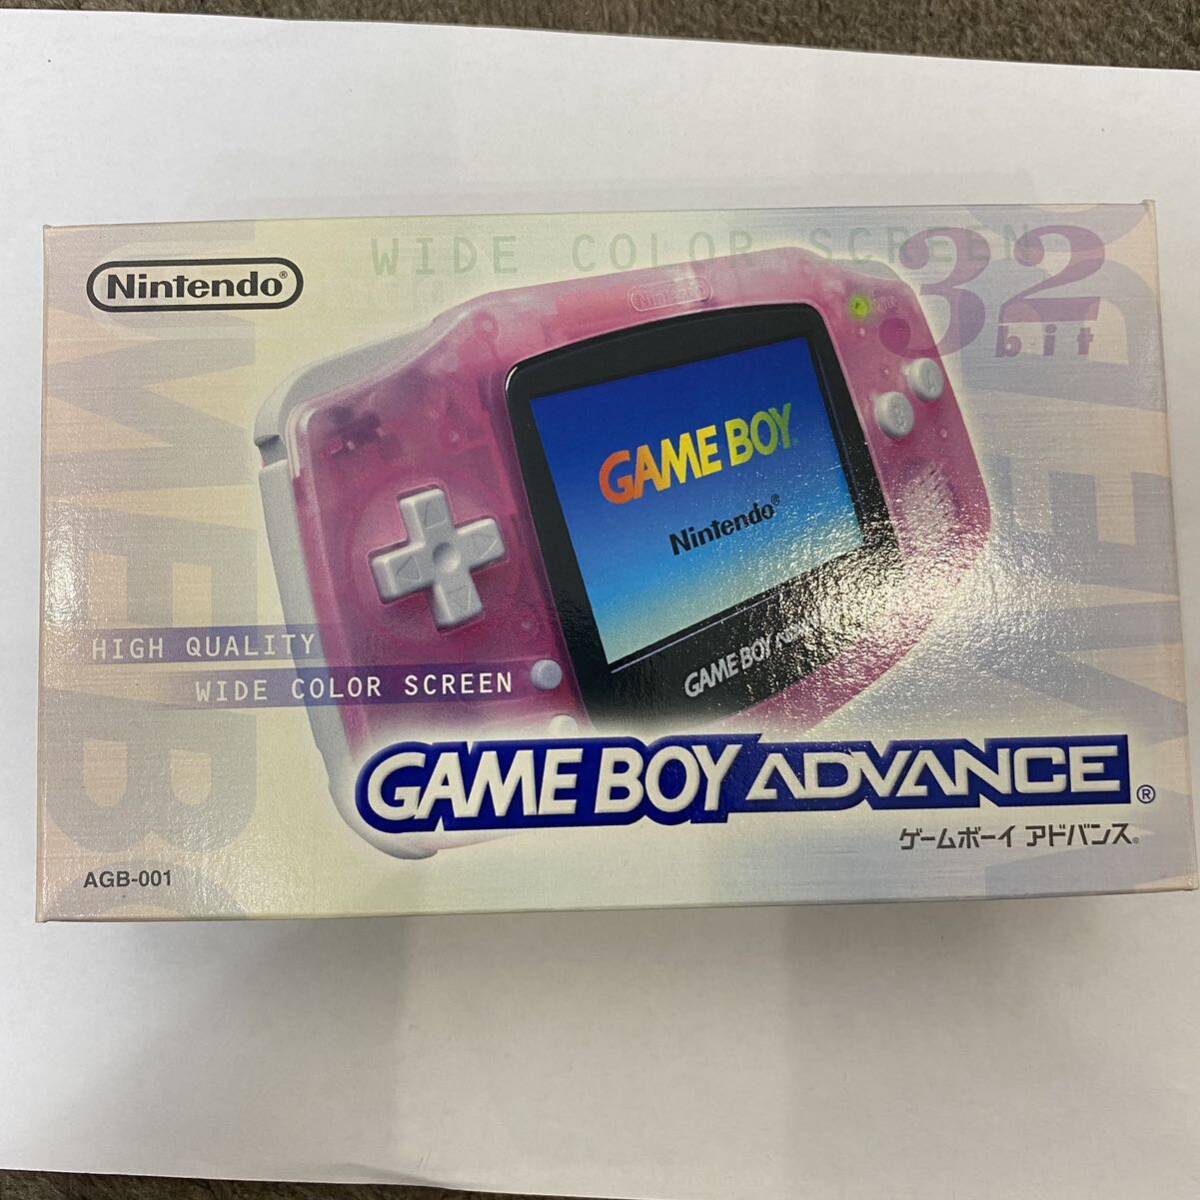  new goods Game Boy Advance rare Mill key pink GBA nintendo instructions box leaflet Nintendo Nintendo Game Boy ultimate beautiful goods 